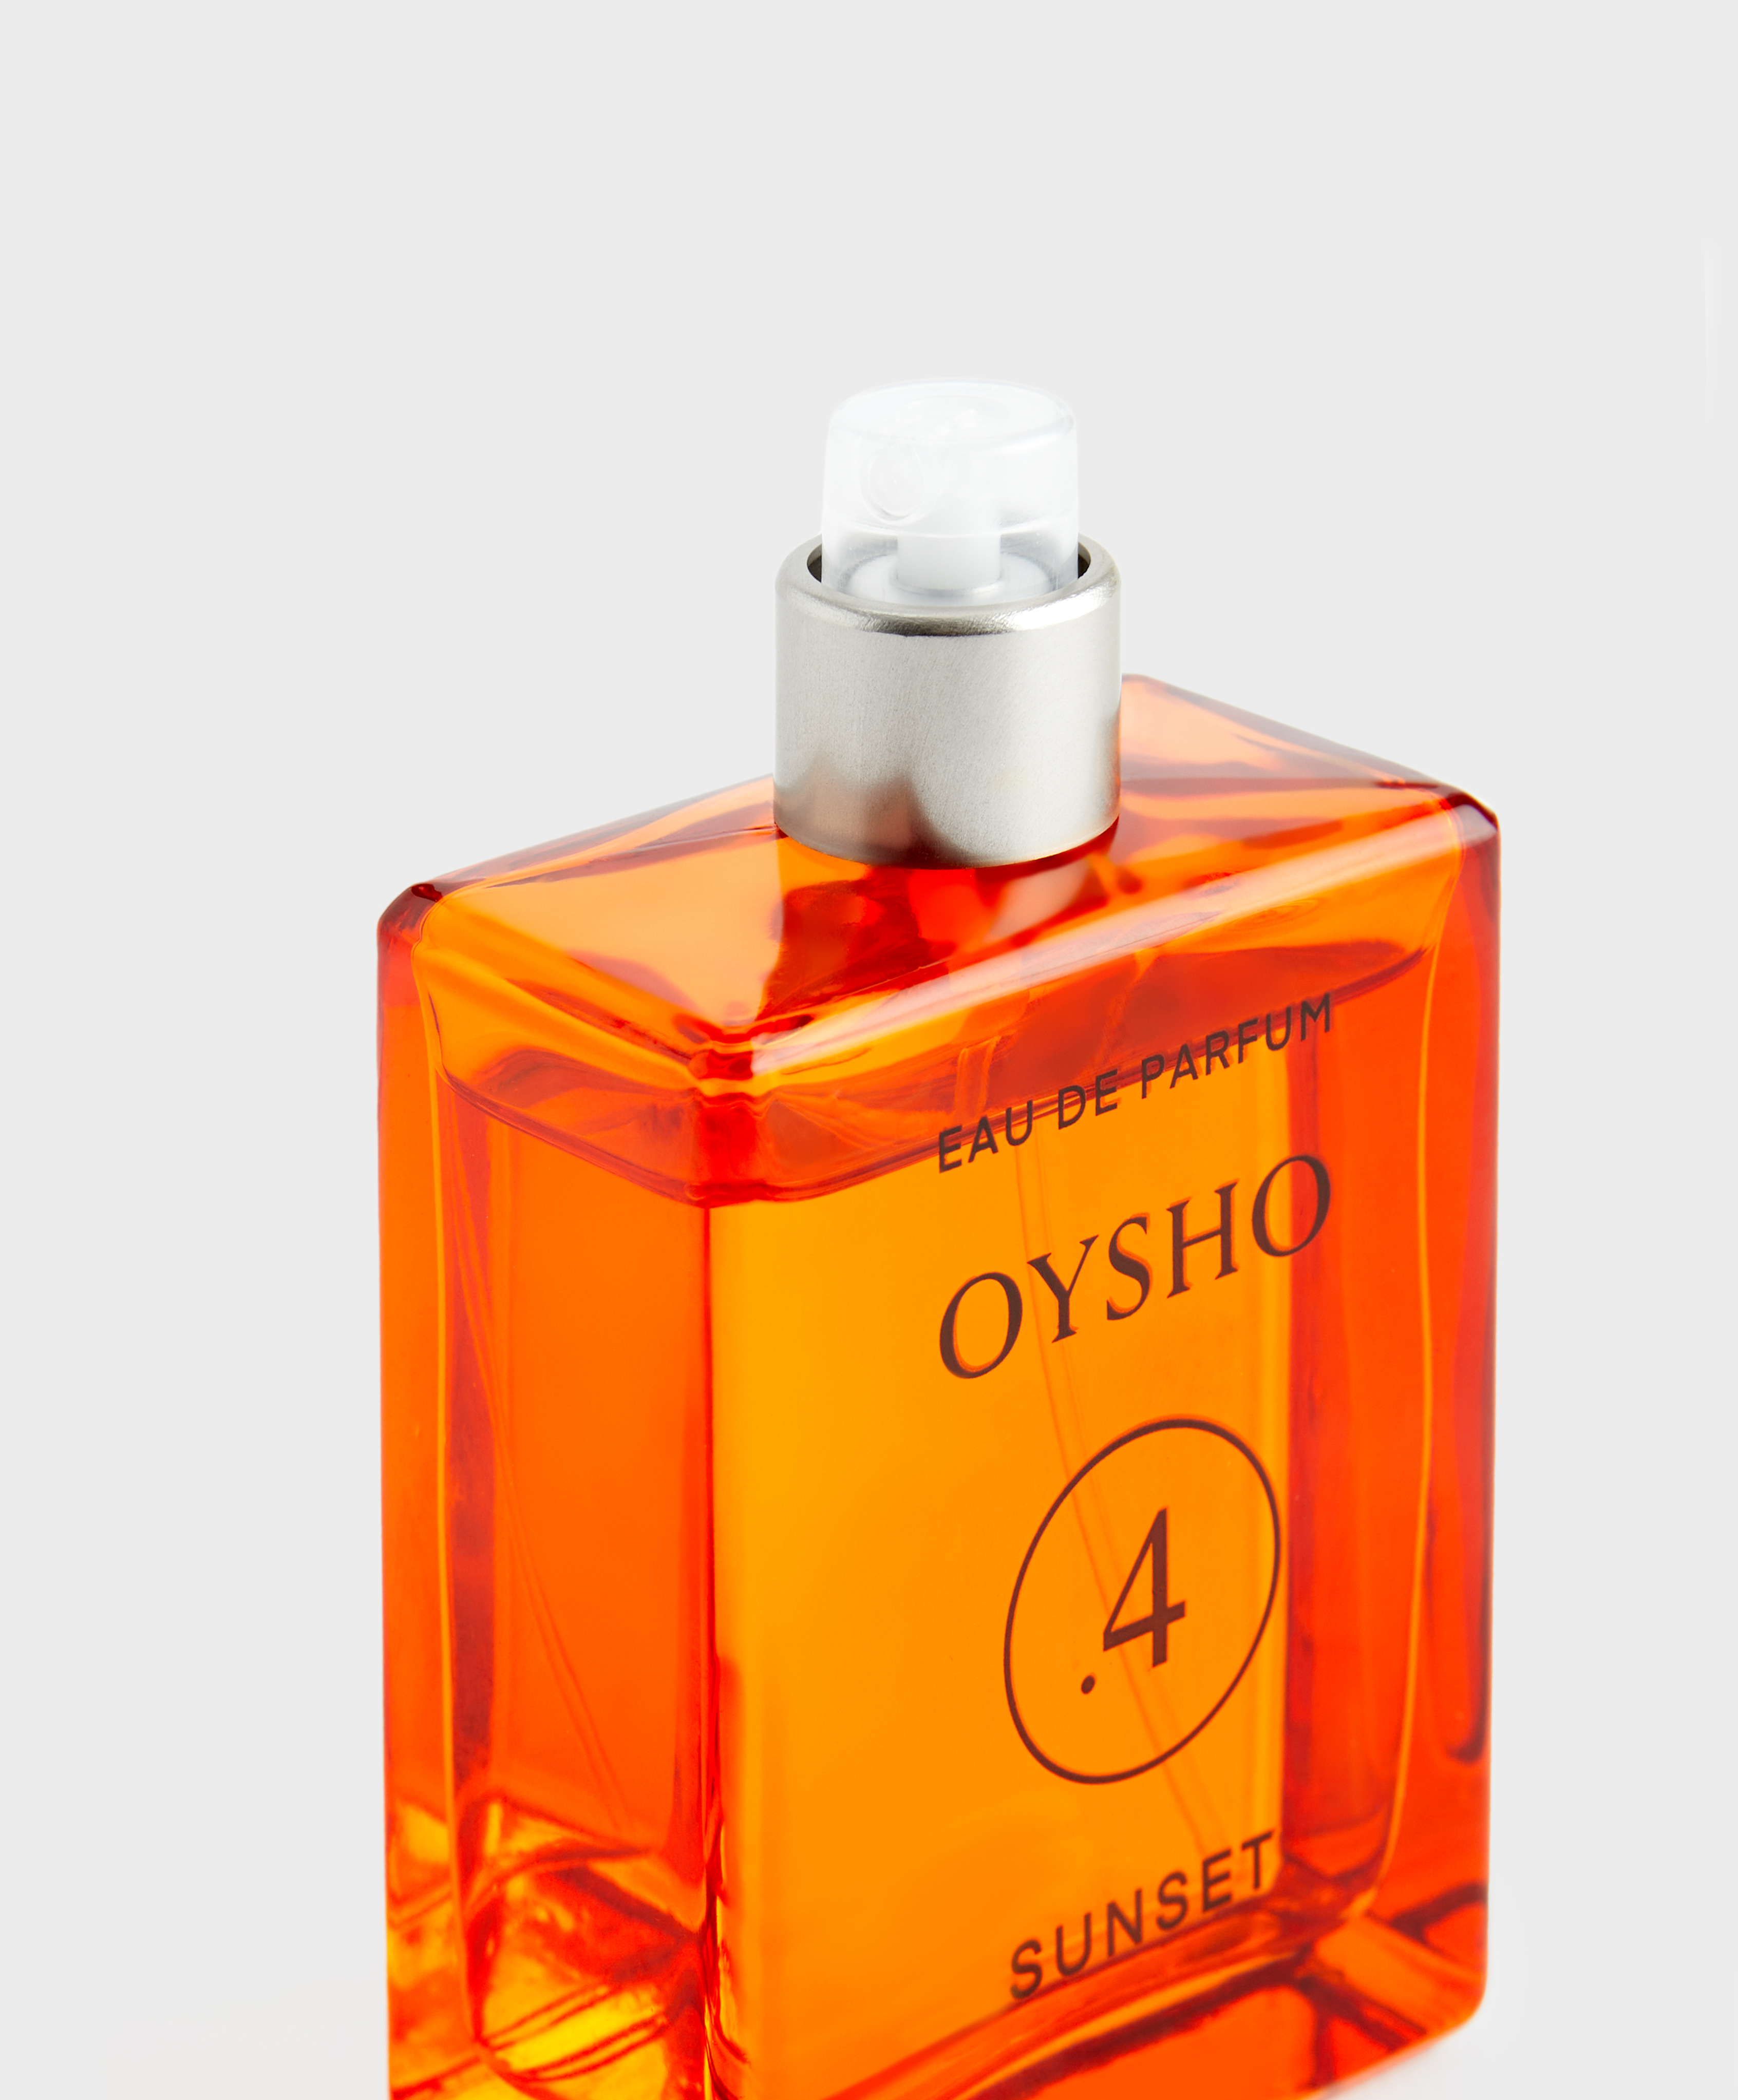 Opiate Mexico Rindende Eau de Parfum 4. Sunset | OYSHO Austria / Österreich